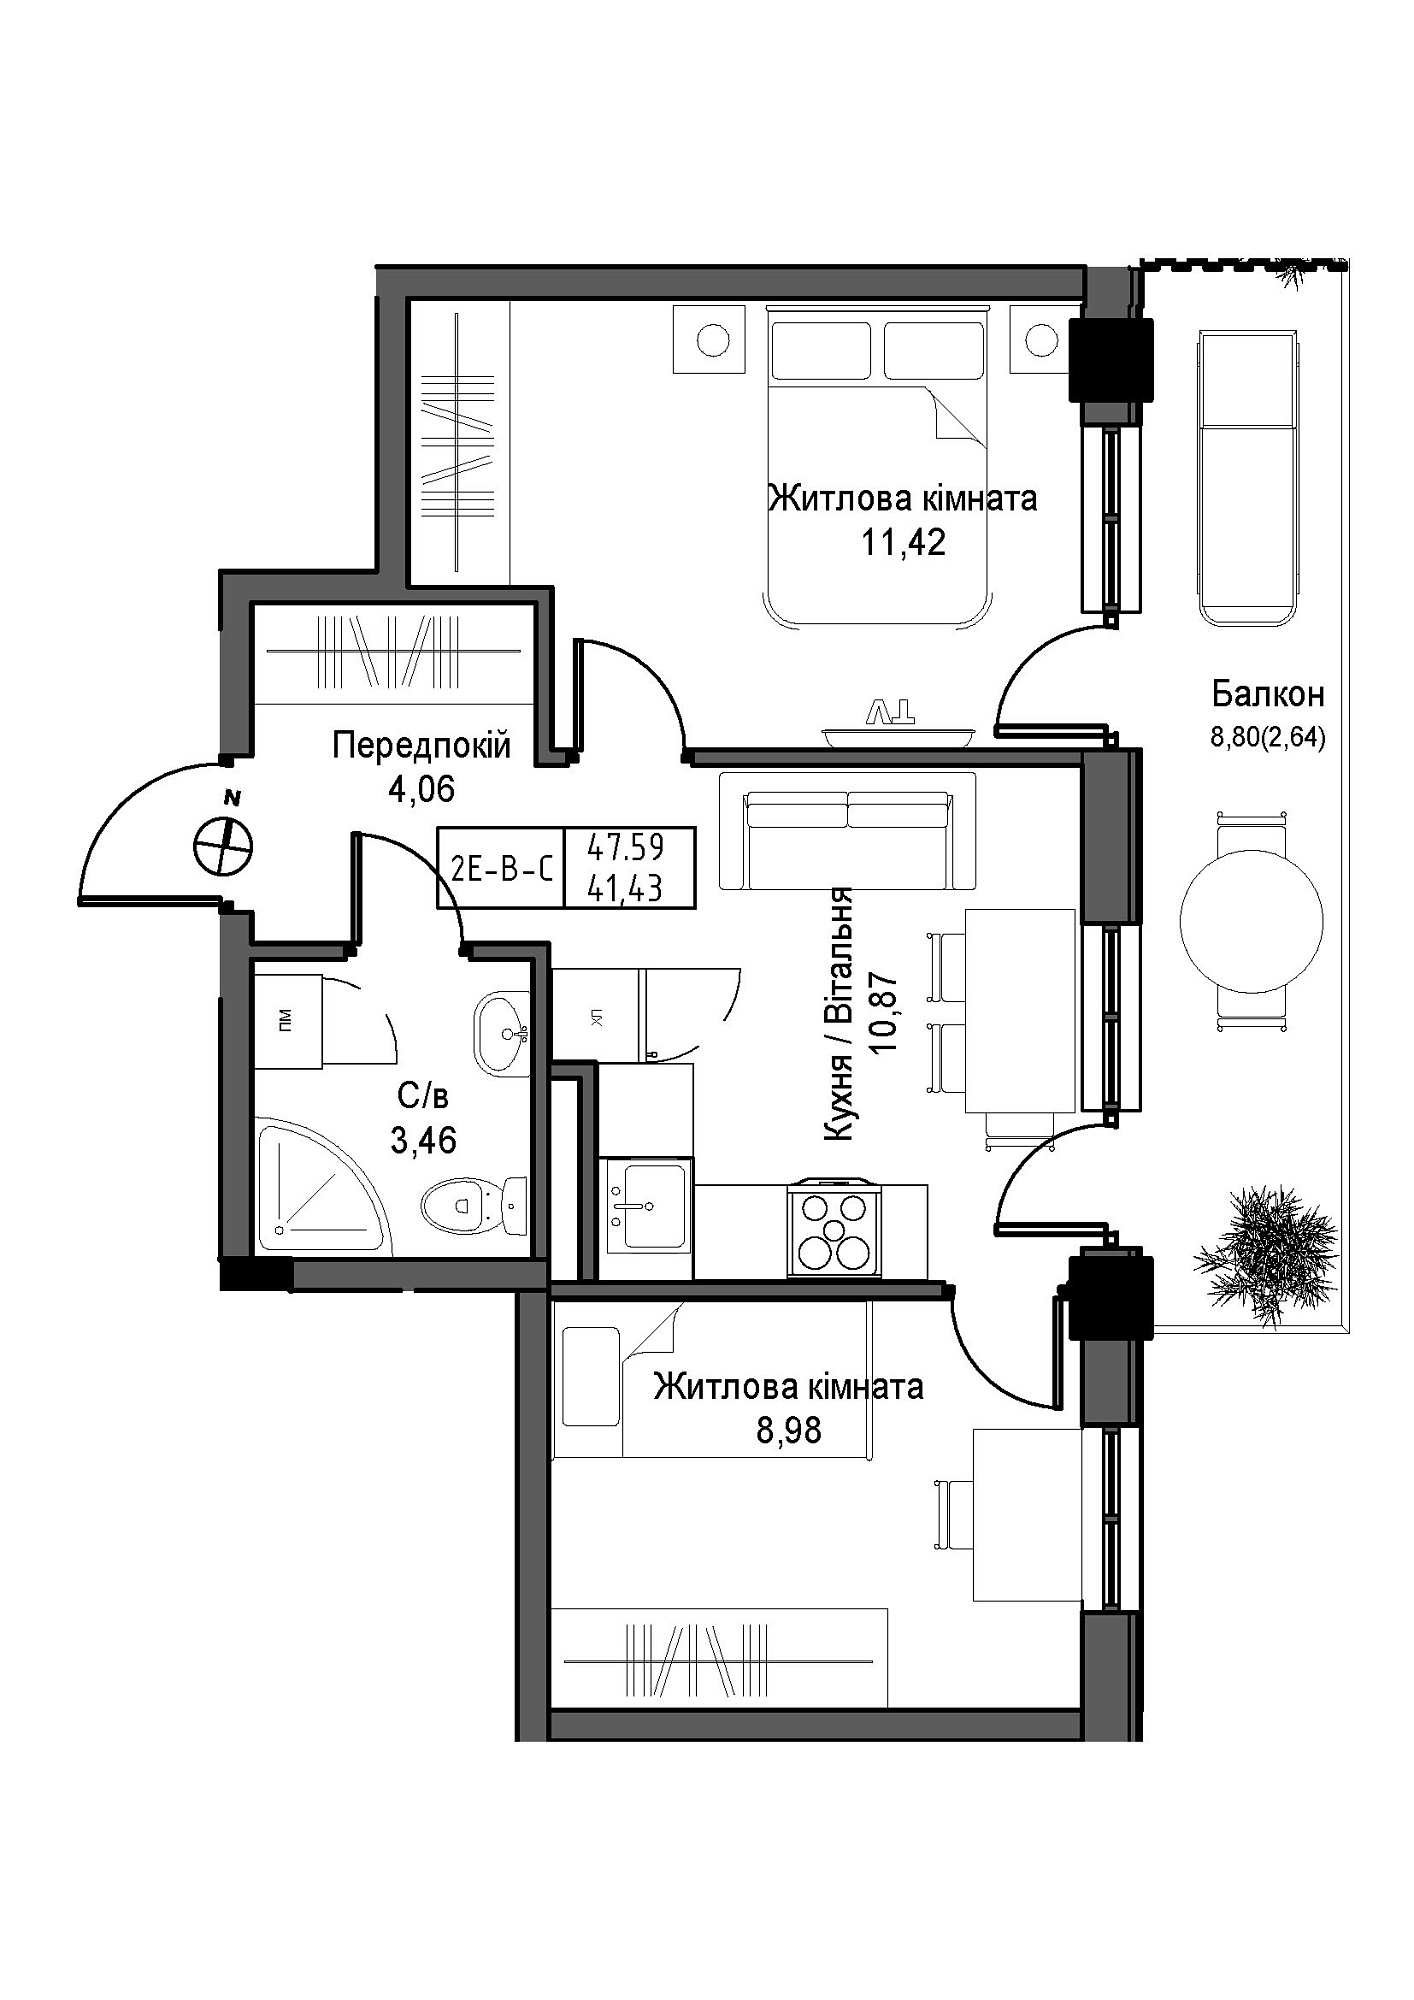 Планування 2-к квартира площею 41.43м2, UM-007-11/0007.